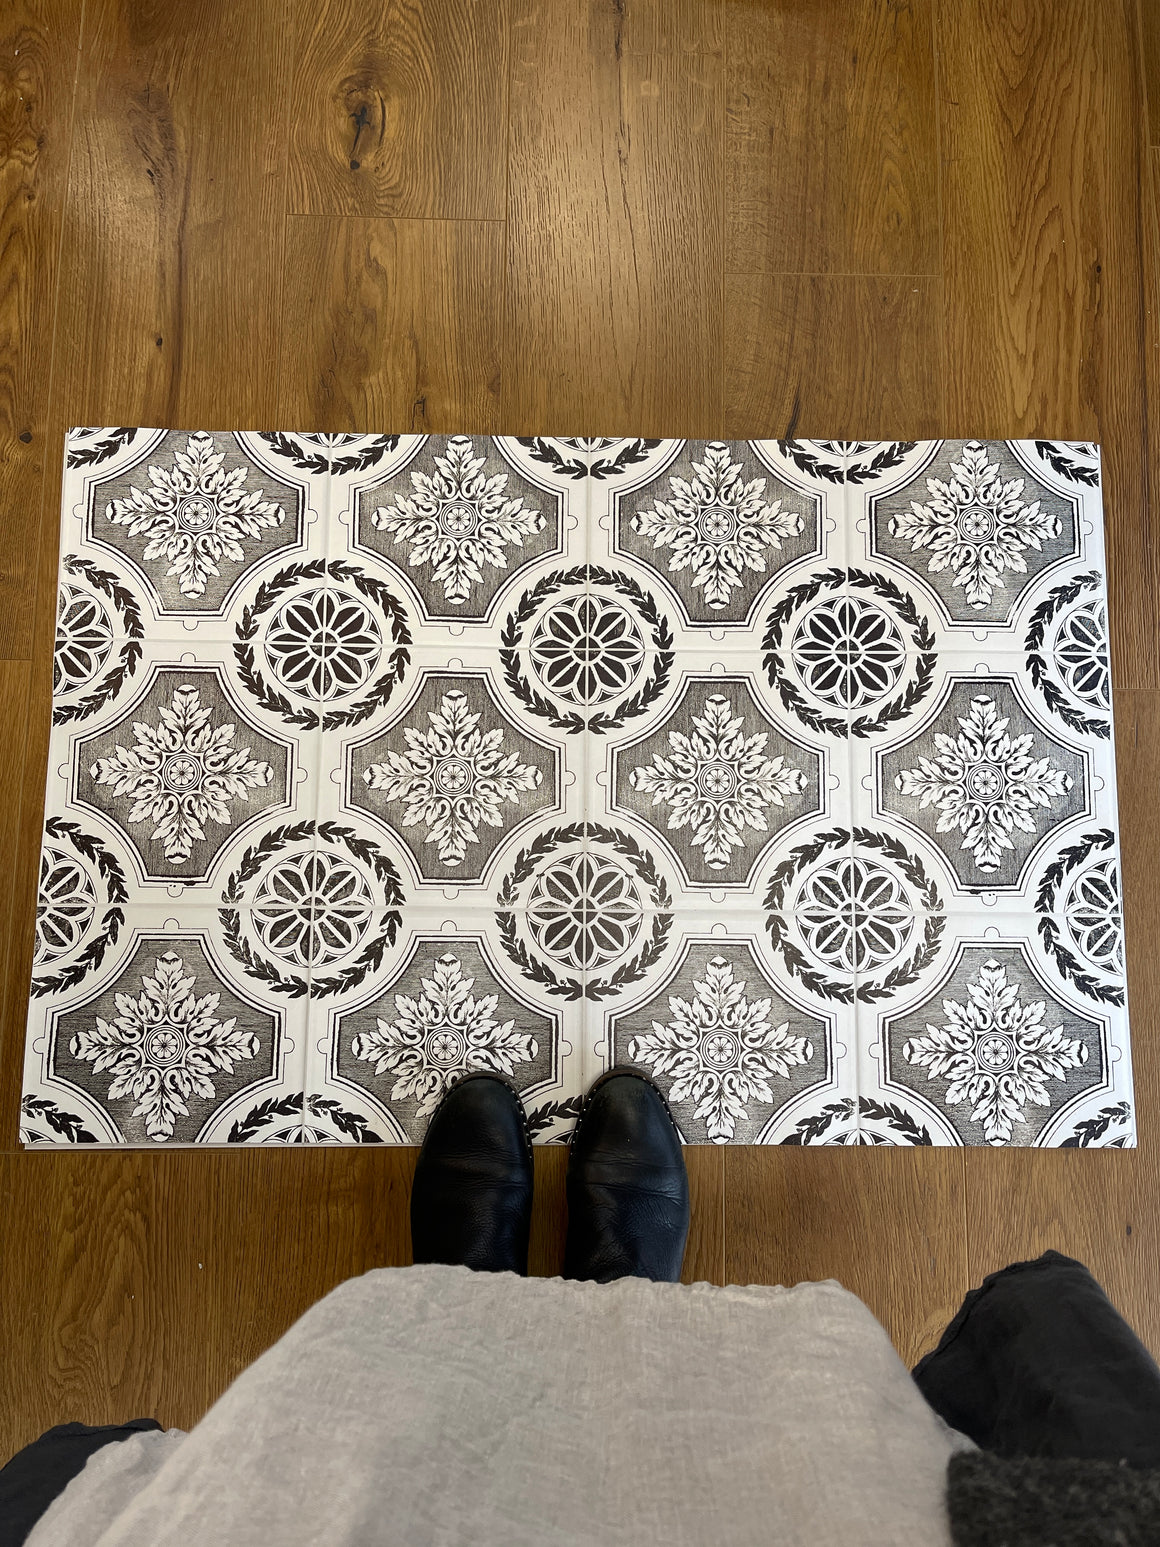 Waterproof Floor Mat - Royal Tile Design 60cm x 90cm